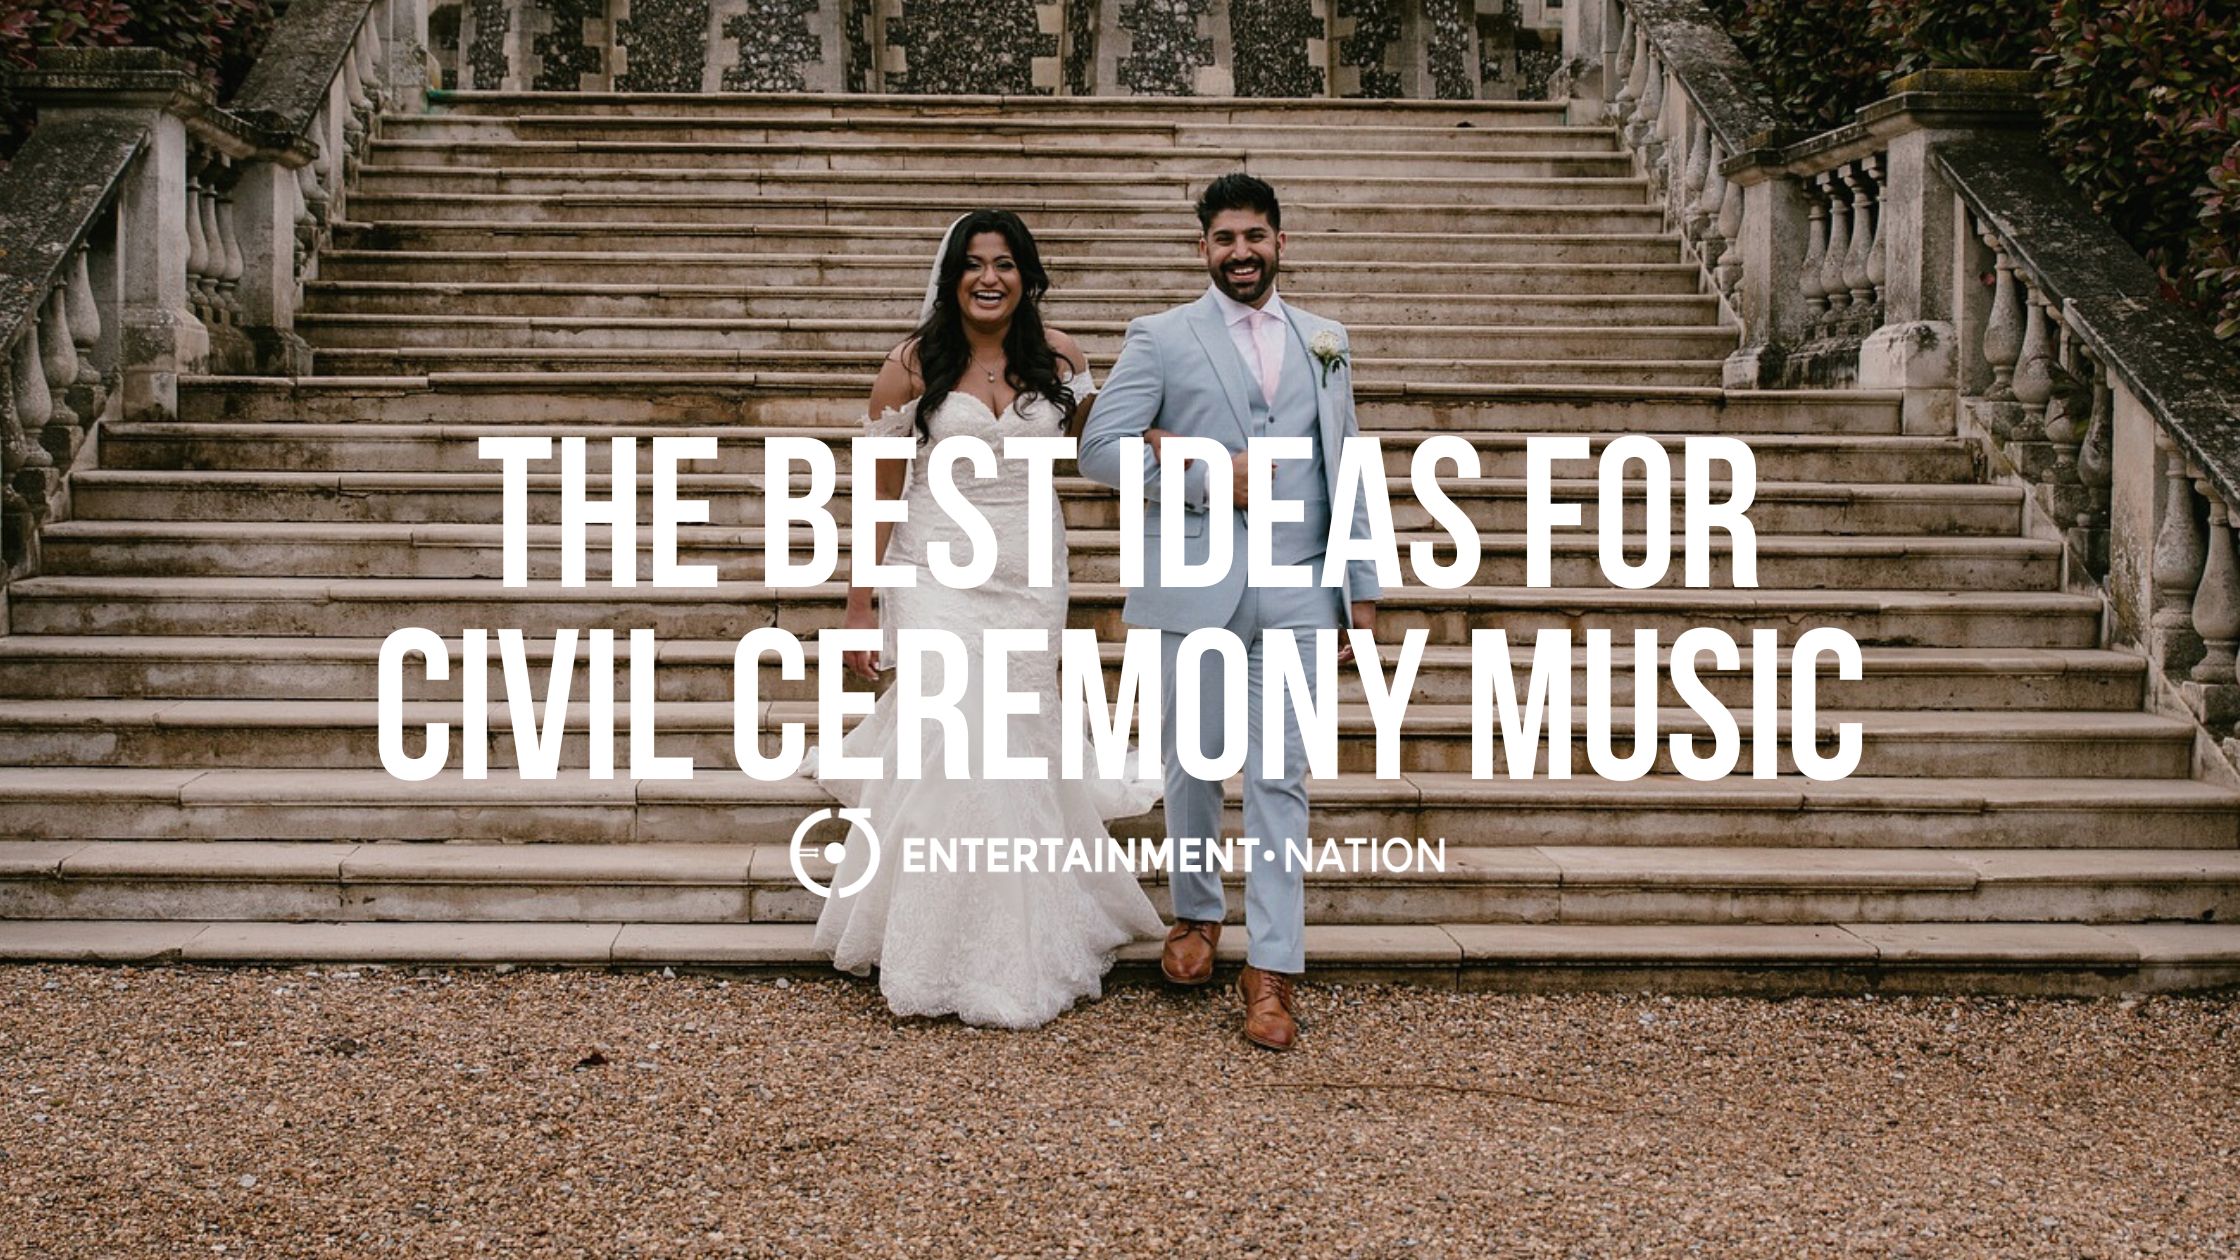 The Best Ideas For Civil Ceremony Music - Entertainment Nation Blog